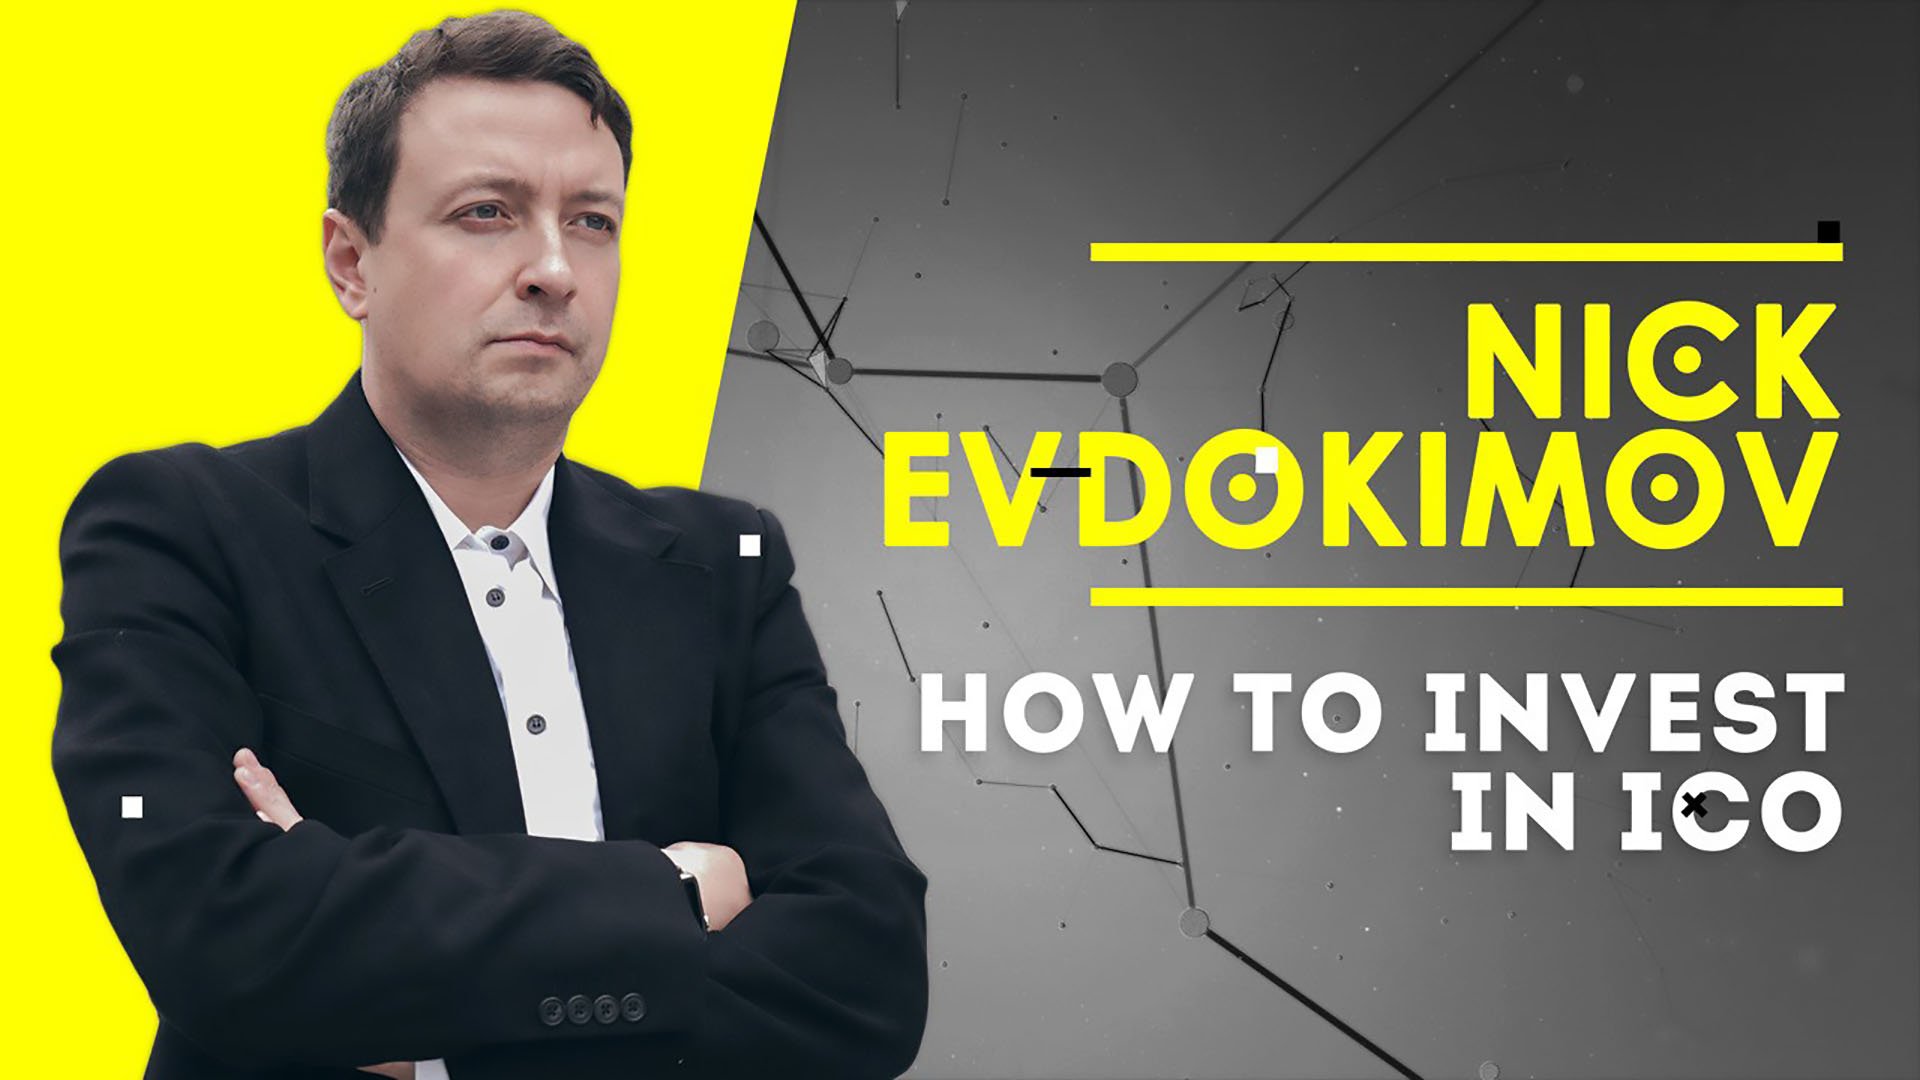 Experienced Serial Entrepreneur Niсk Evdokimov Shares ICO Investment Strategies